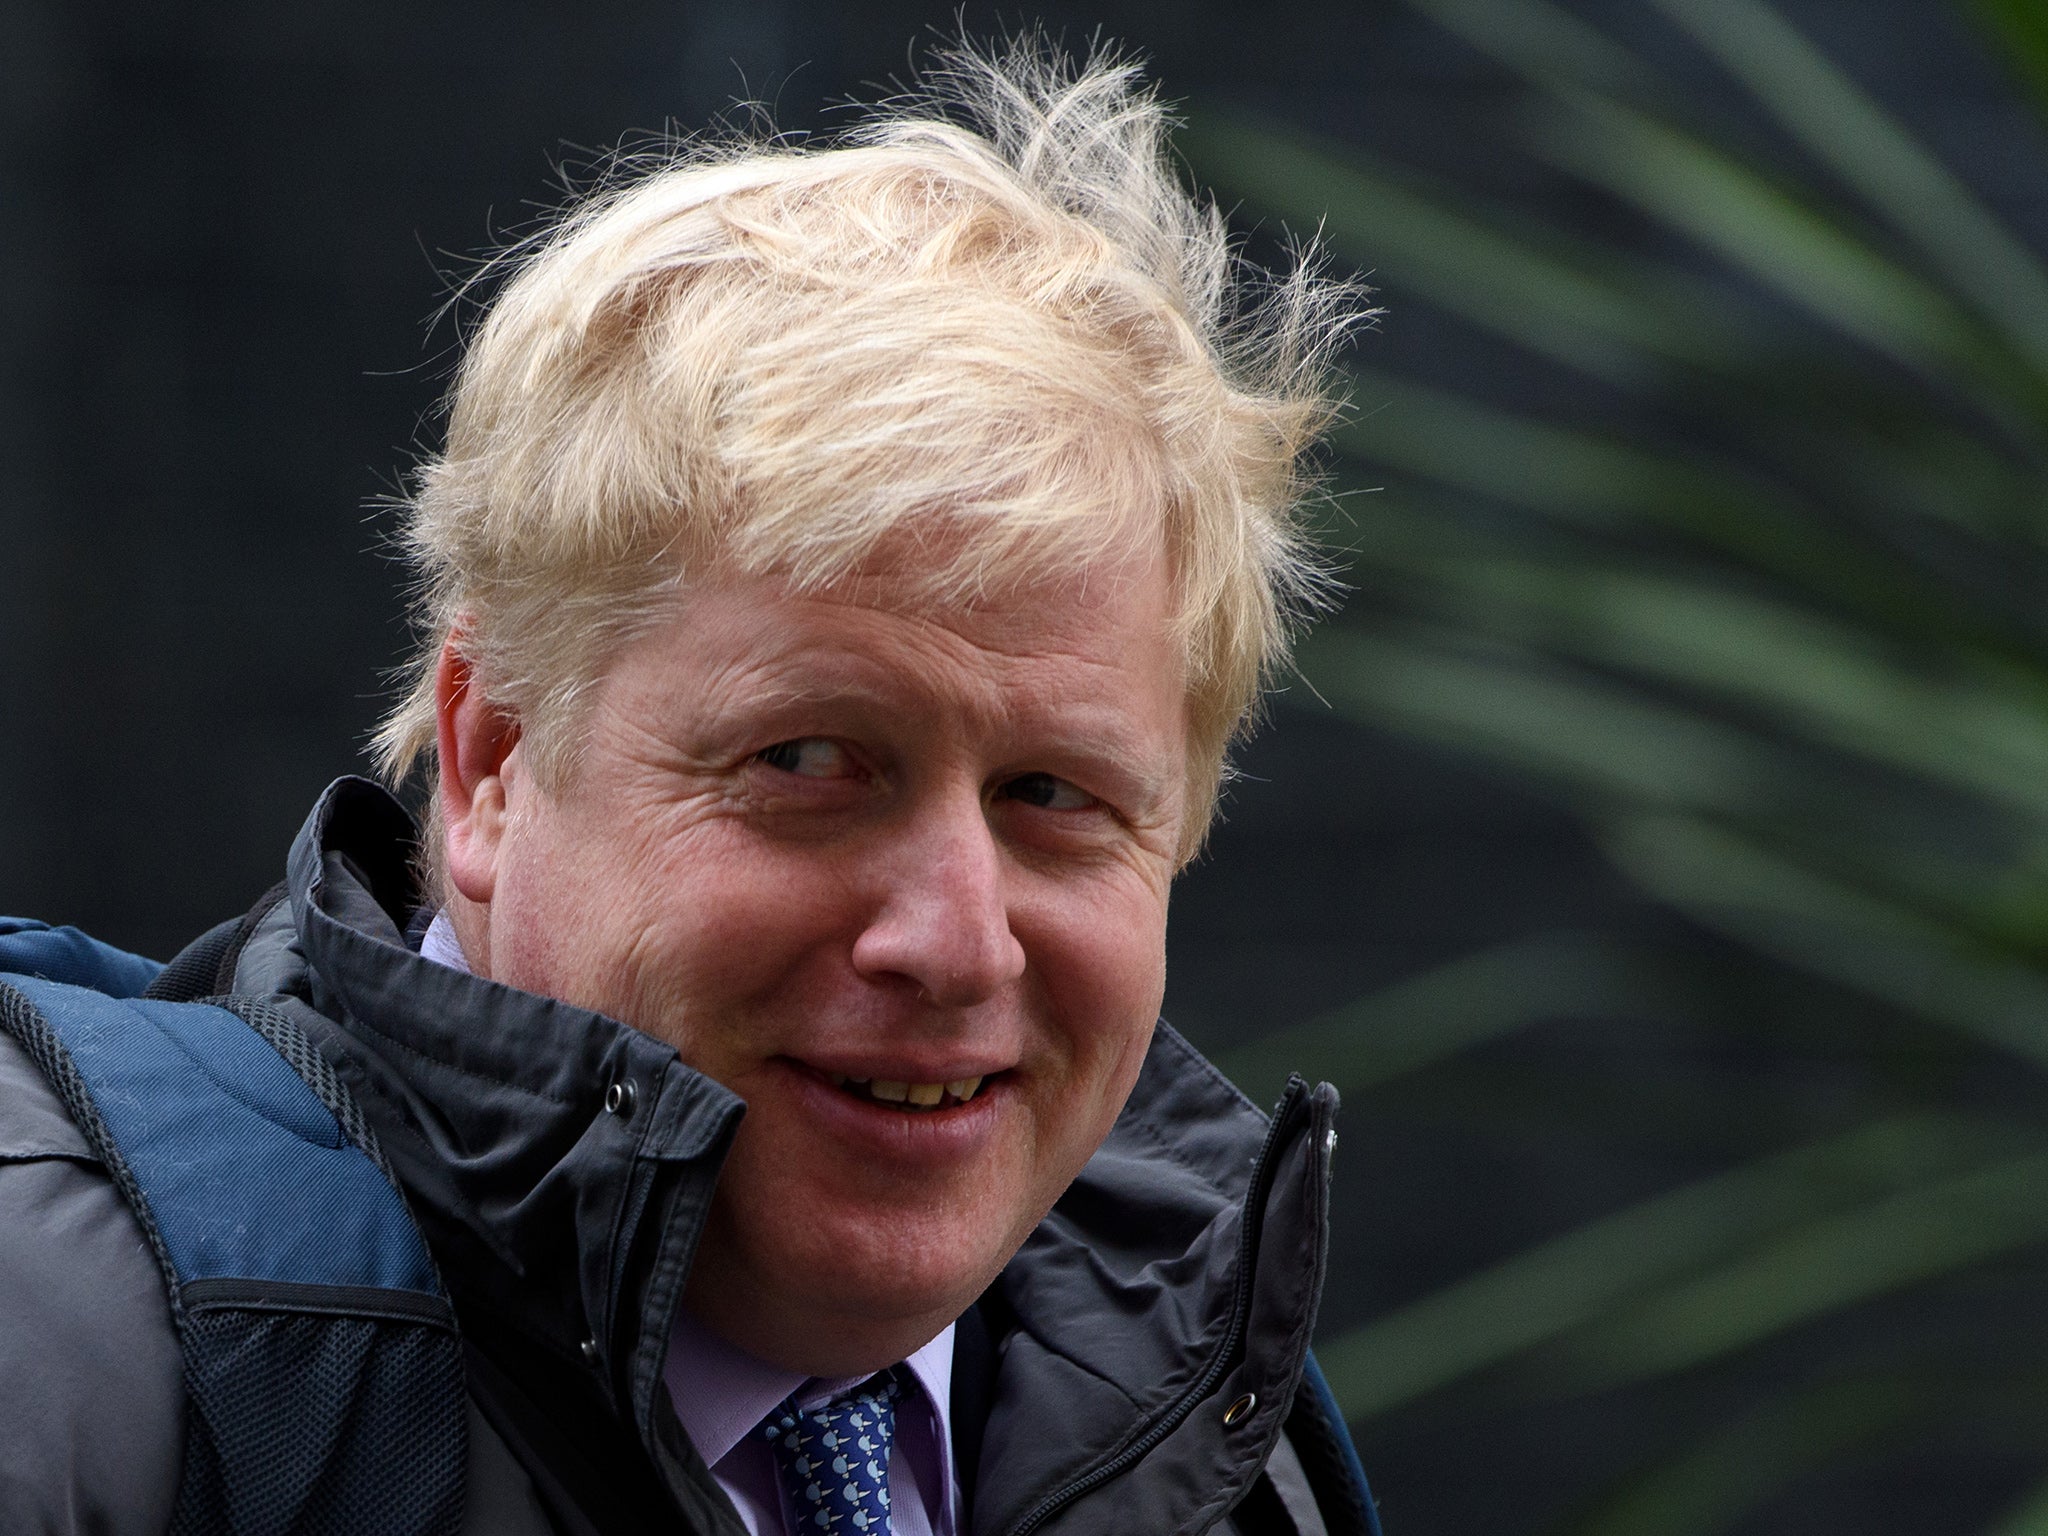 Major of London, Boris Johnson